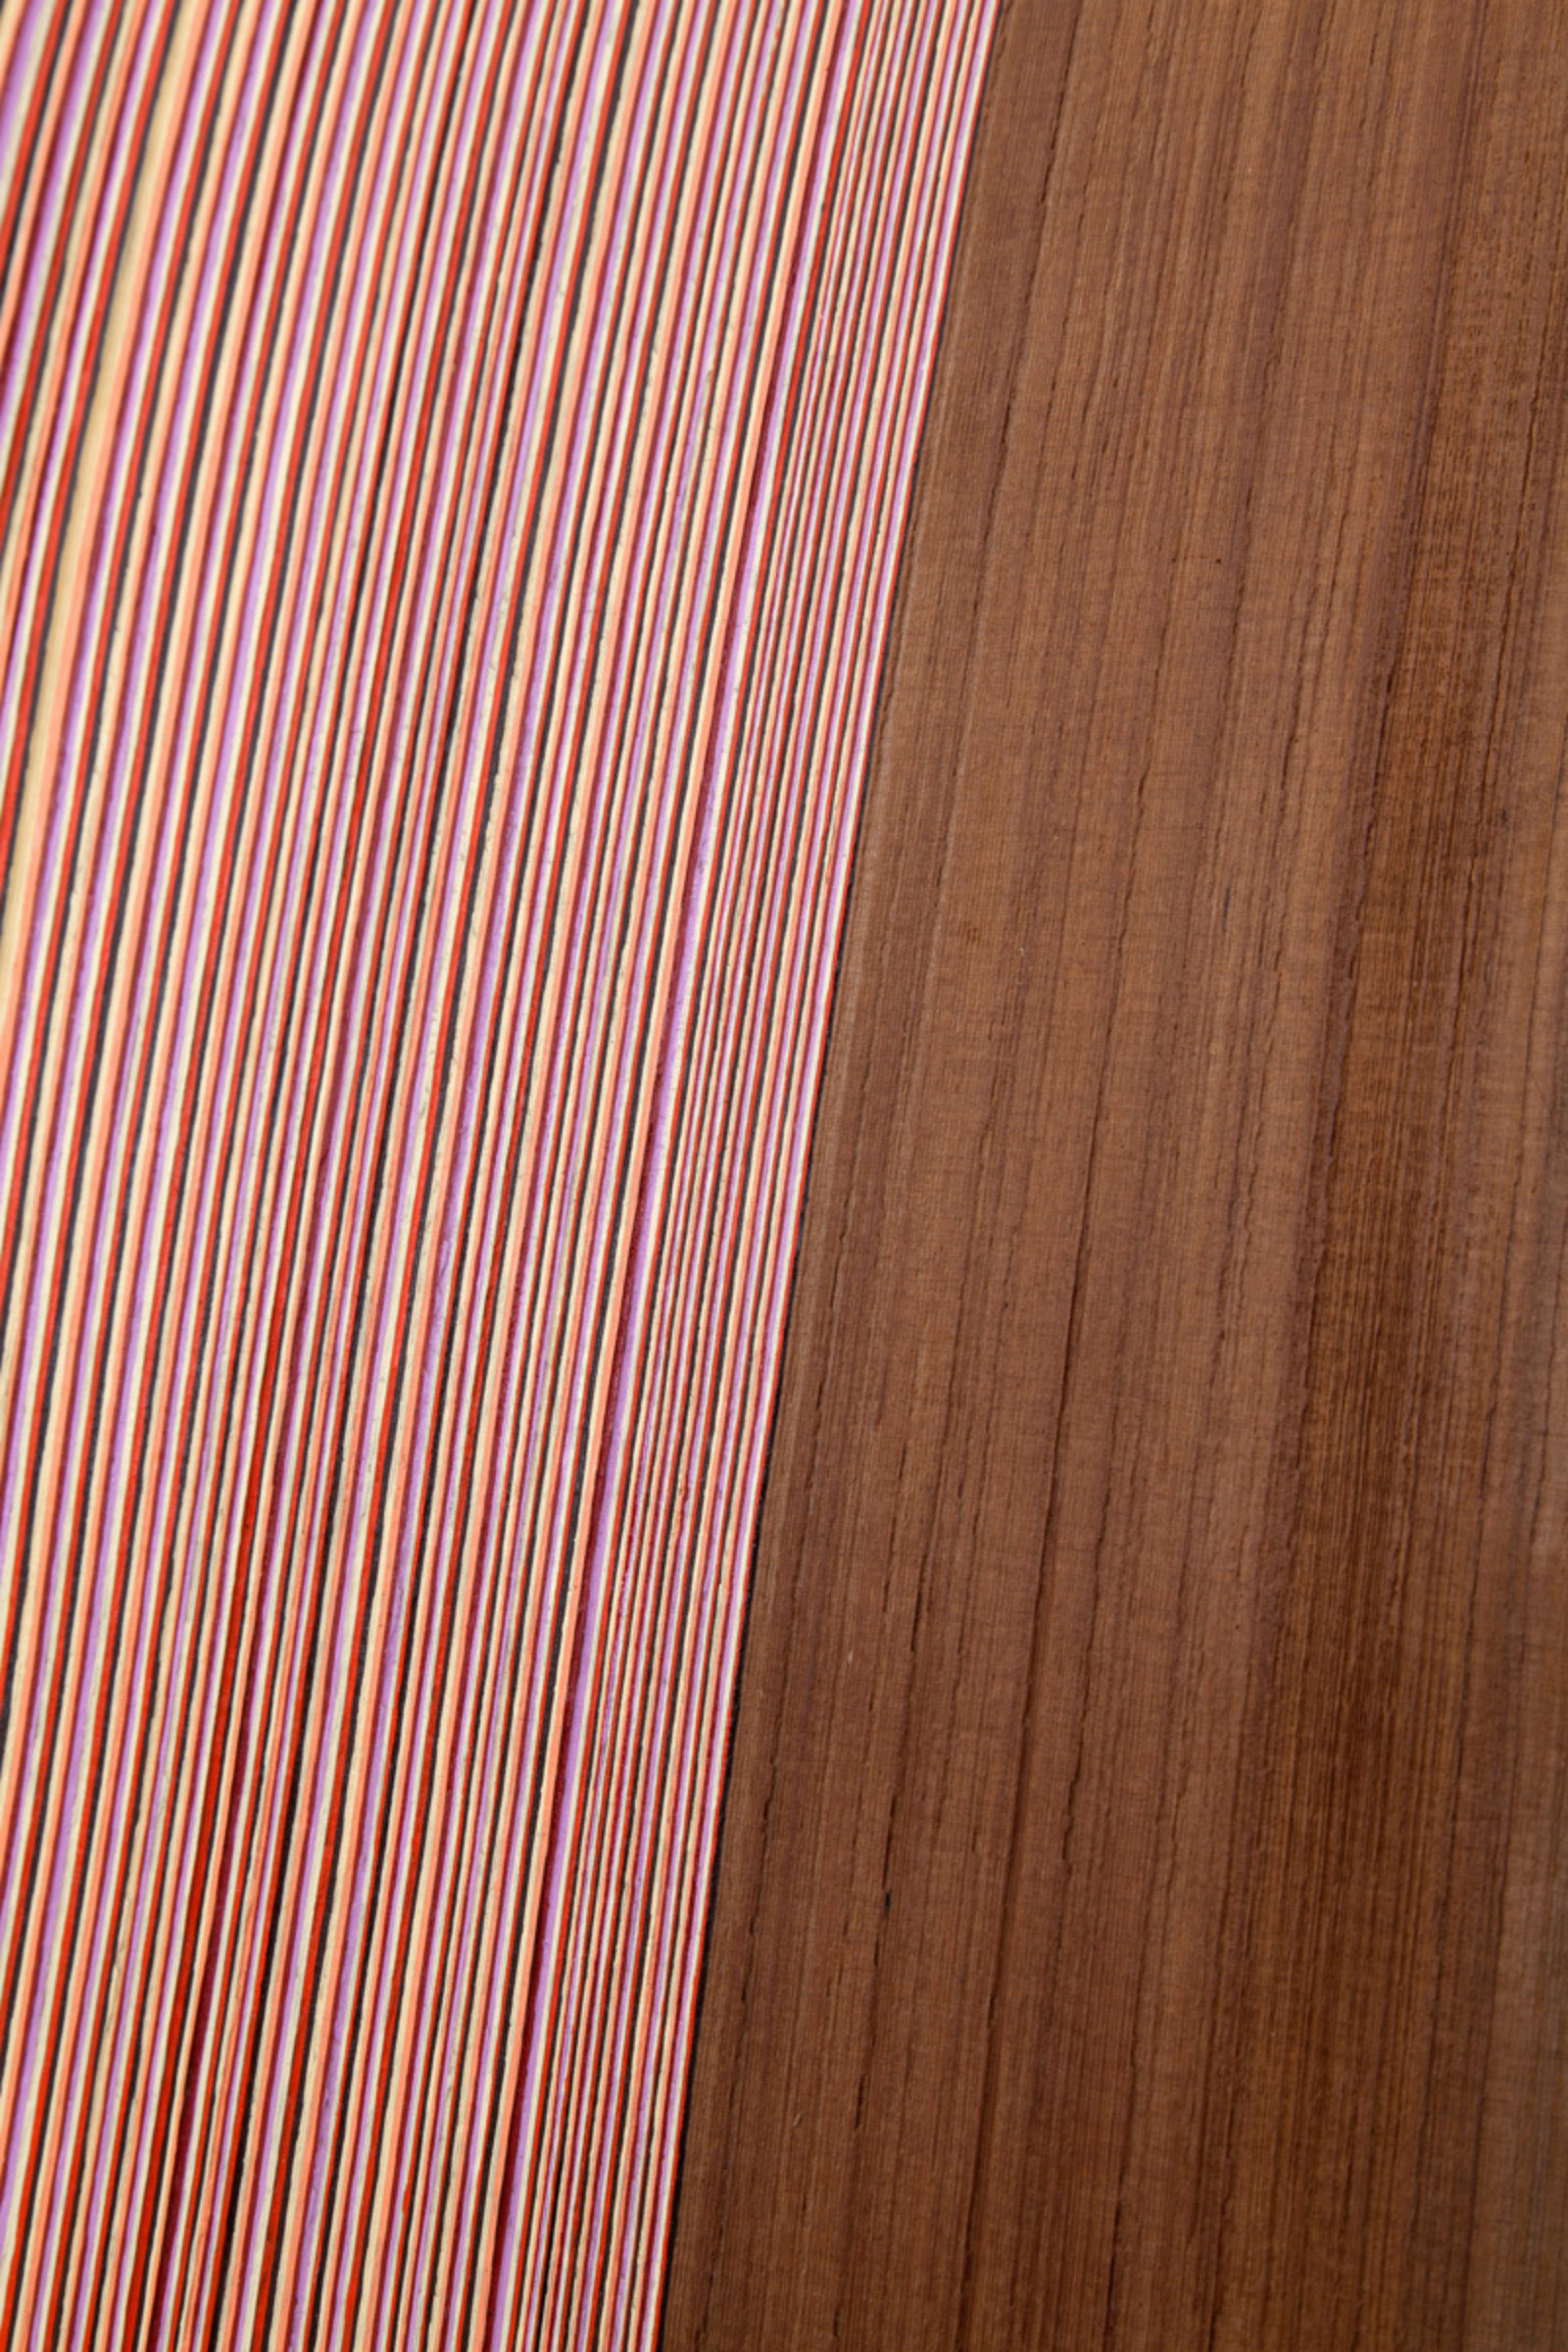 Brian Jungen, Shake (detail), 2014, cedar, alkyd-resin enamel, 28 x 12 x 1 in. (70 x 29 x 2 cm)